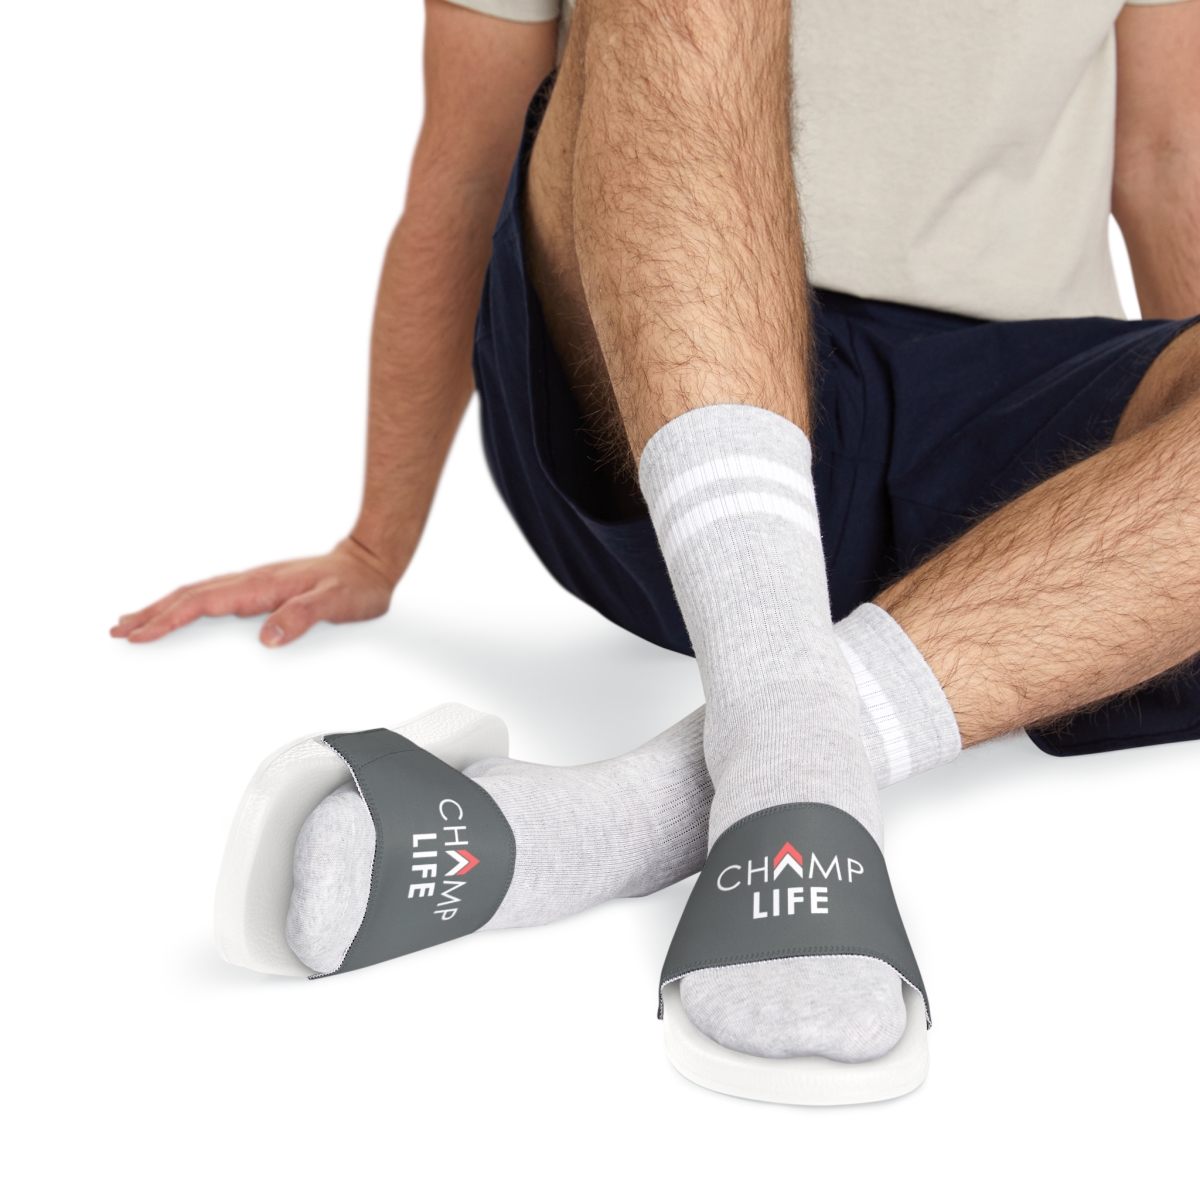 Men's Slide Sandals - gray product thumbnail image